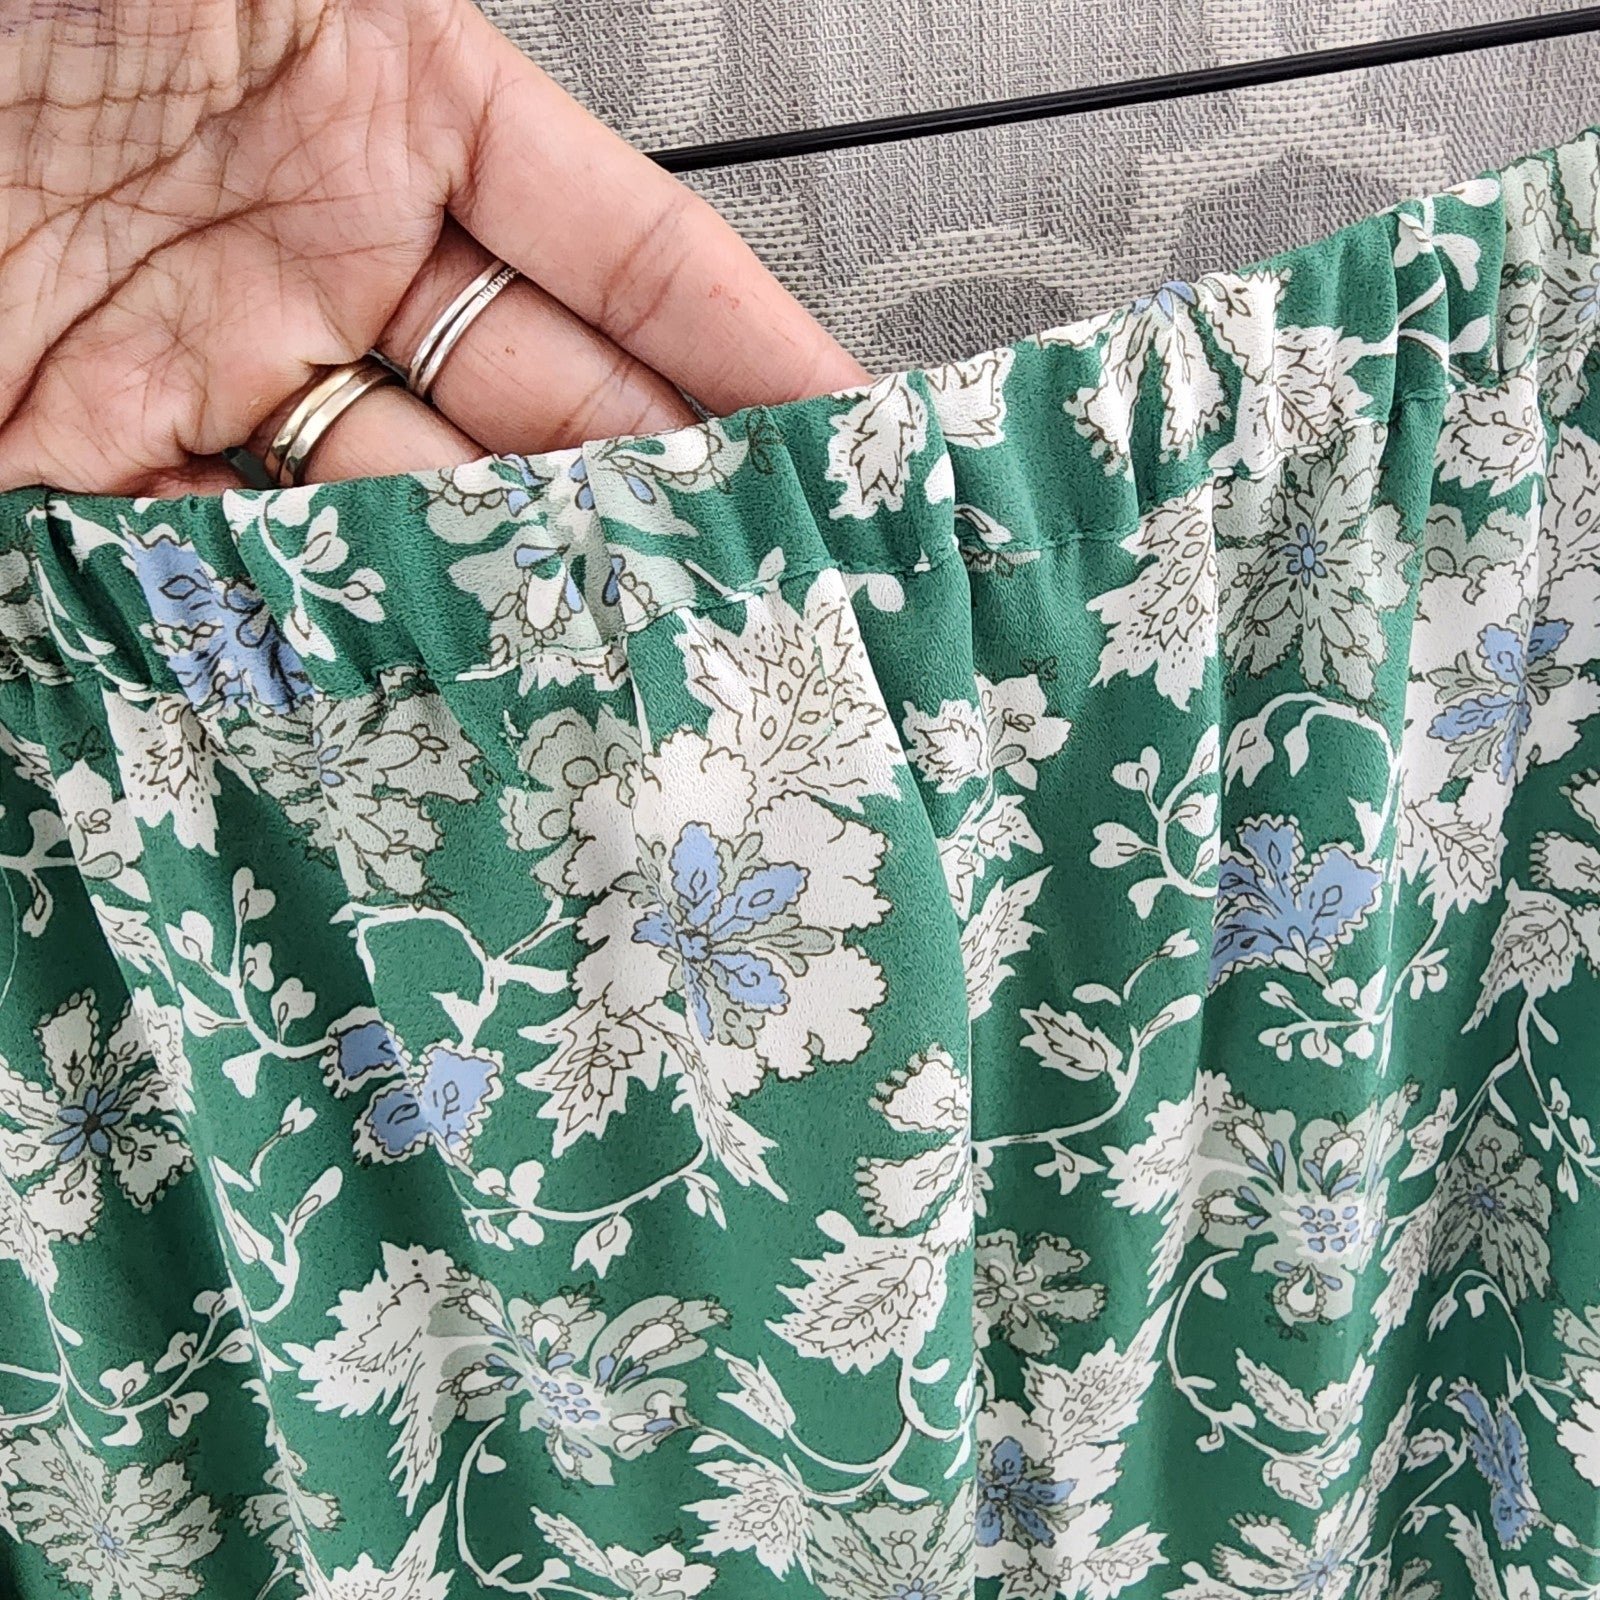 Great Max Studio Floral Ruffle High Low Tied Side Chiffon Maxi Skirt M fjldztwg4 Buying Cheap